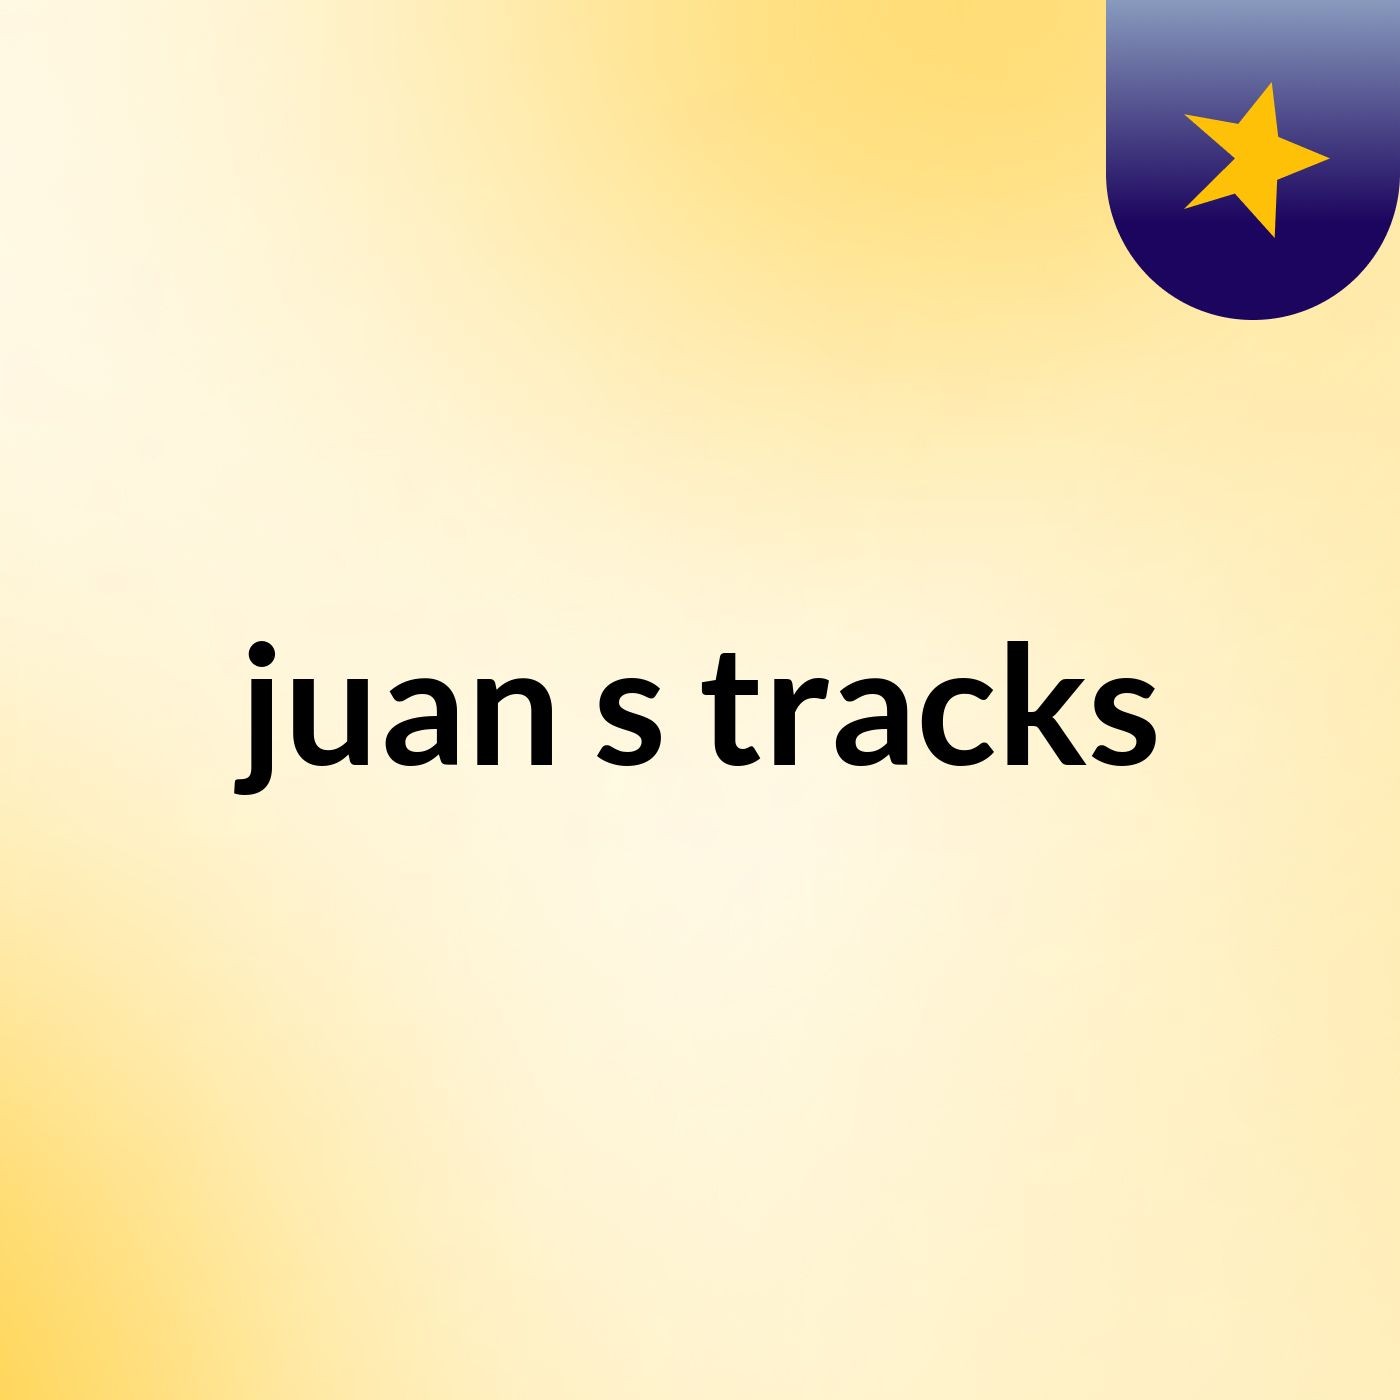 juan's tracks